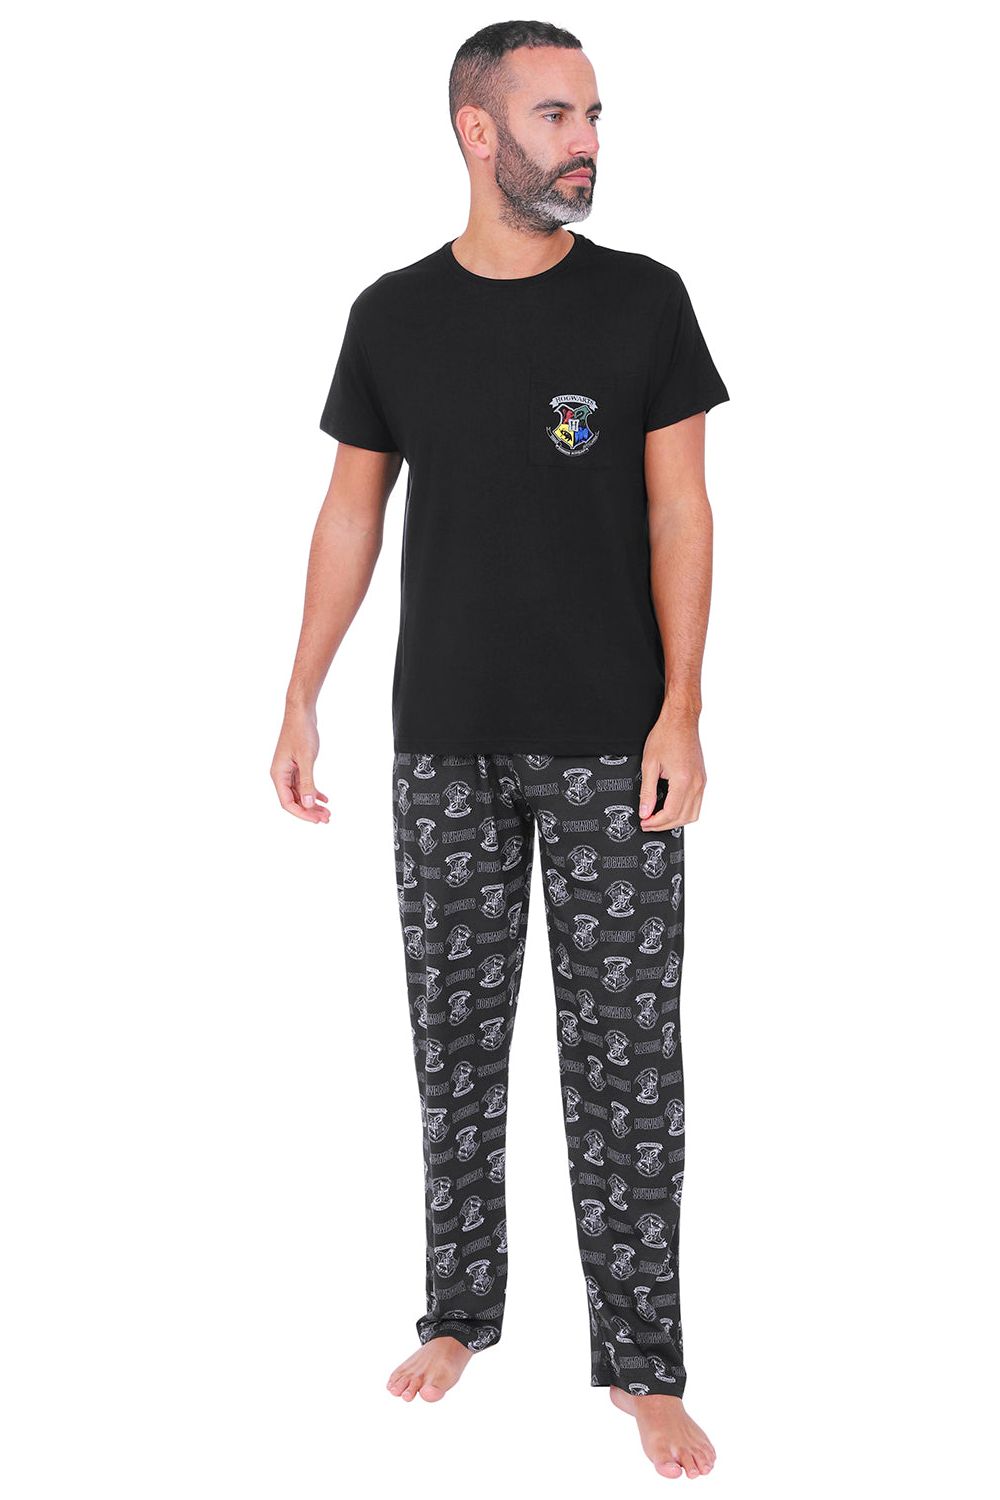 Men's Official Harry Potter Pocket Long Pyjamas Sizes S to 2XL Mens Pjs